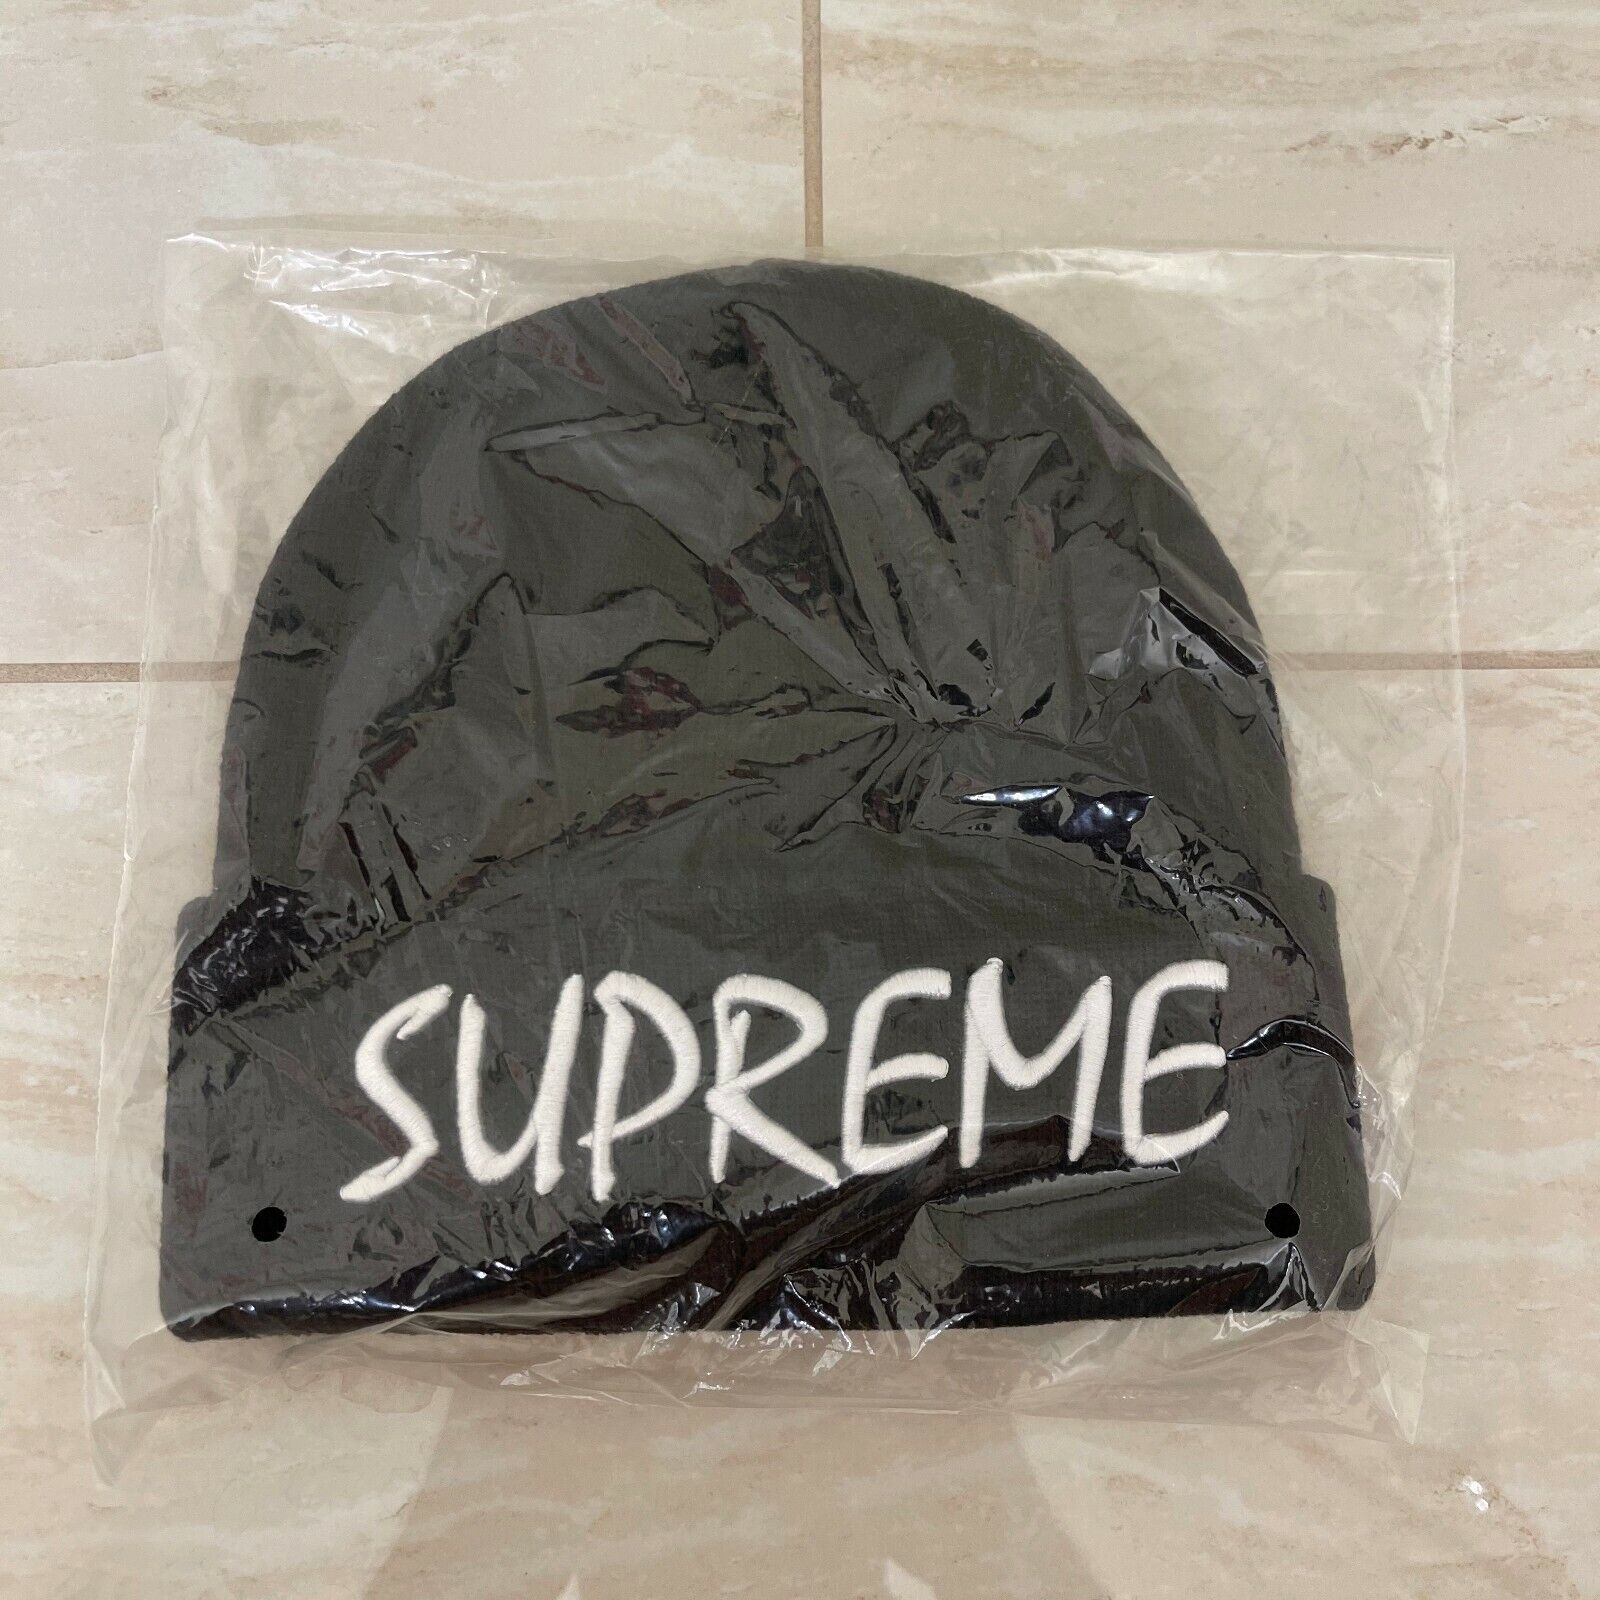 New Supreme FTP Beanie Skull Cap Hat Acrylic Black Spring Summer 2021 SS21